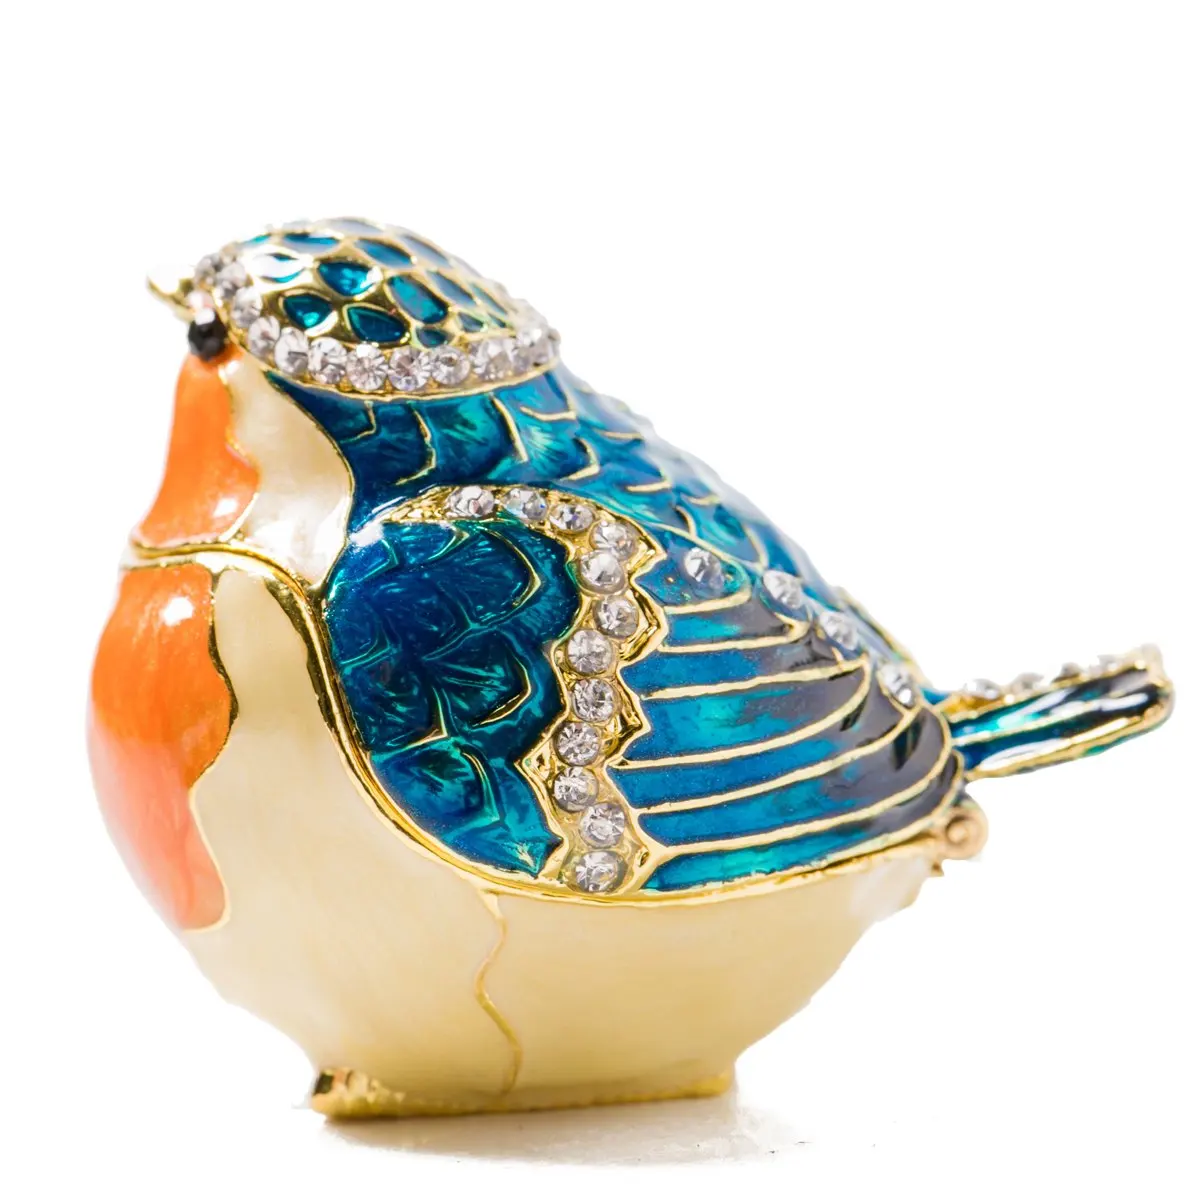 Chickadee Bird Trinket Jewelry Enameled Box Crystals Figurine Decor Gifts Holder